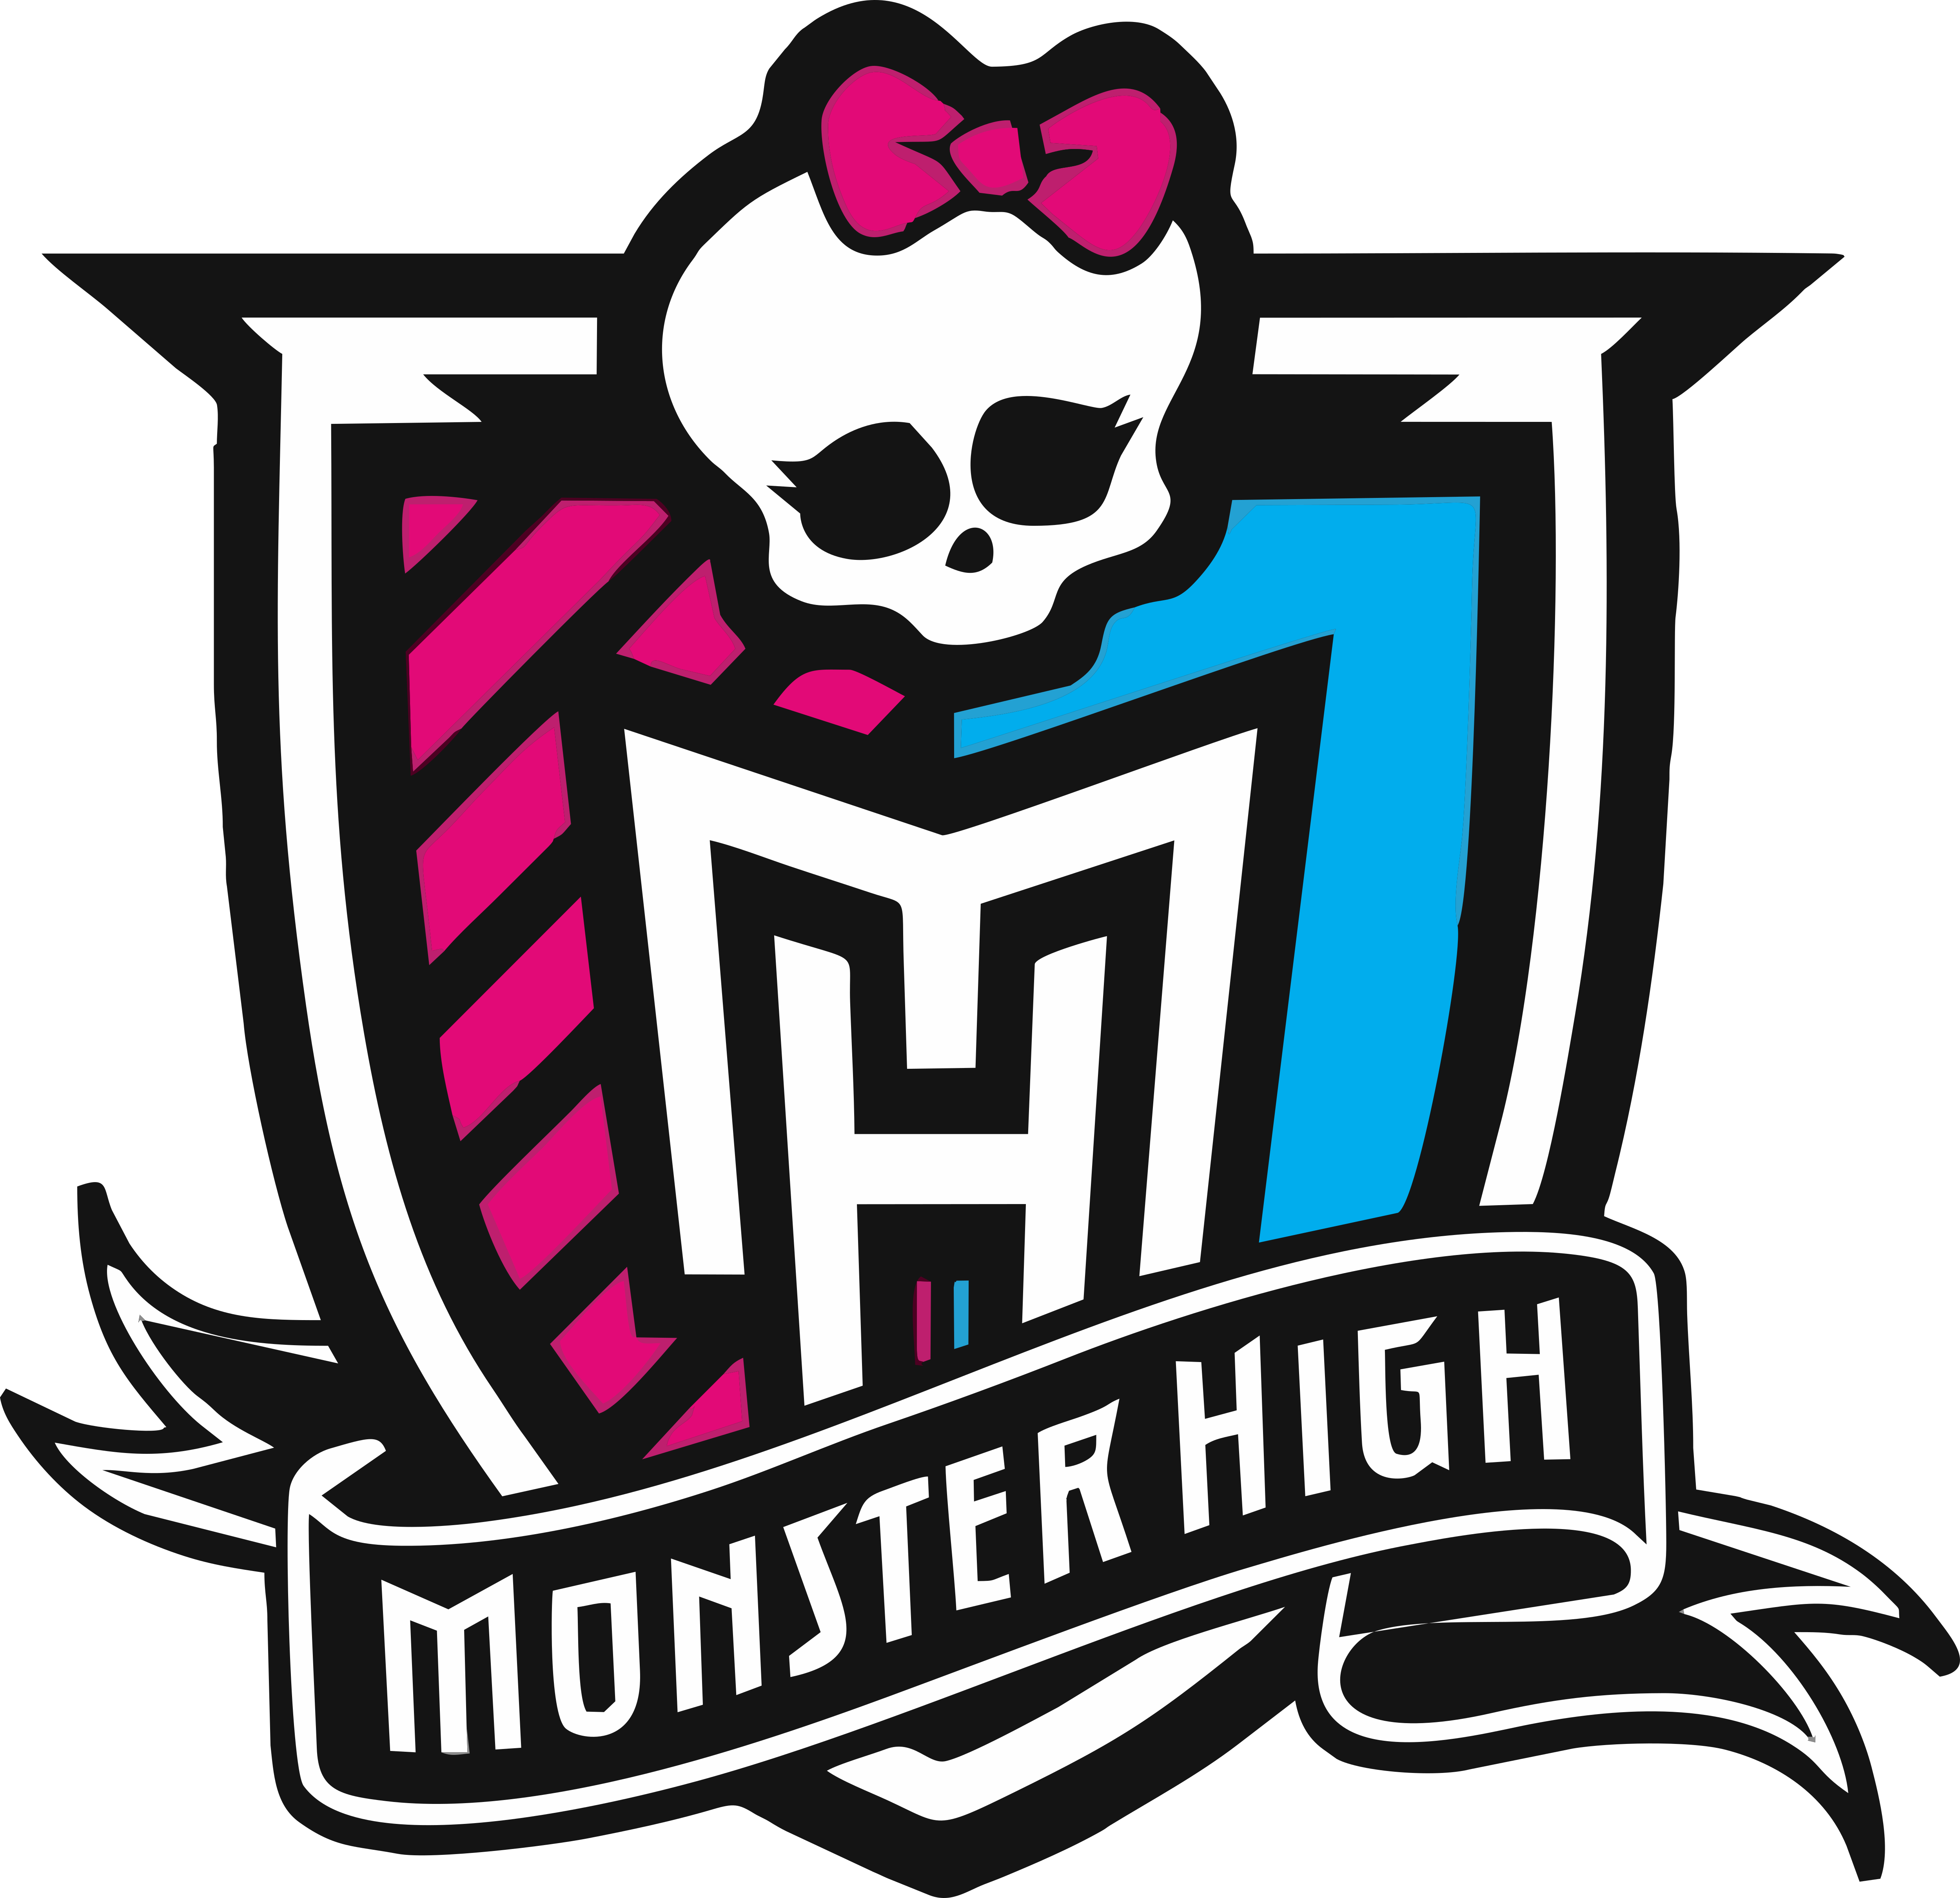 Details 47 el logo de monster high